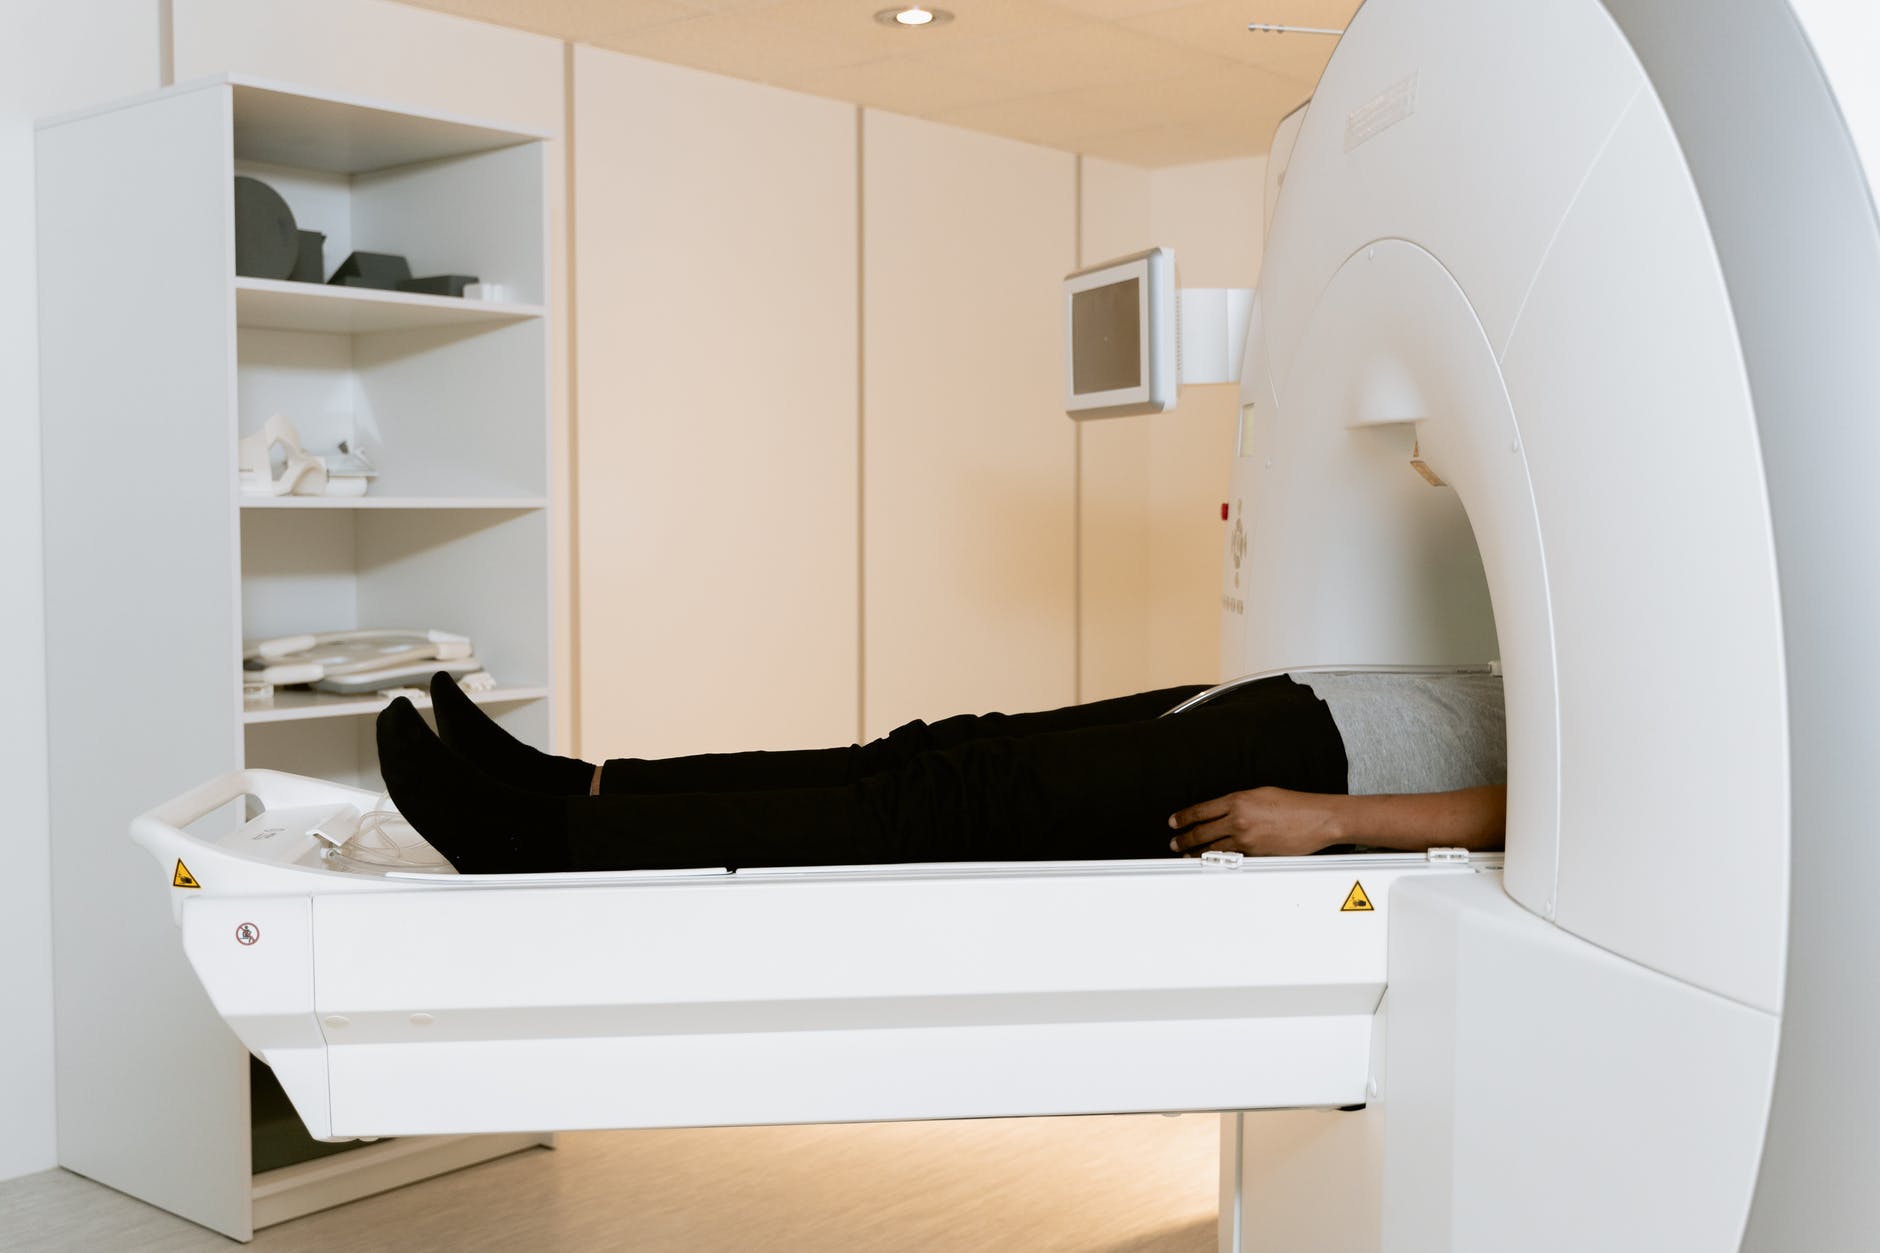 Cervical MRI and osteoarthritis: Diagnostic tool